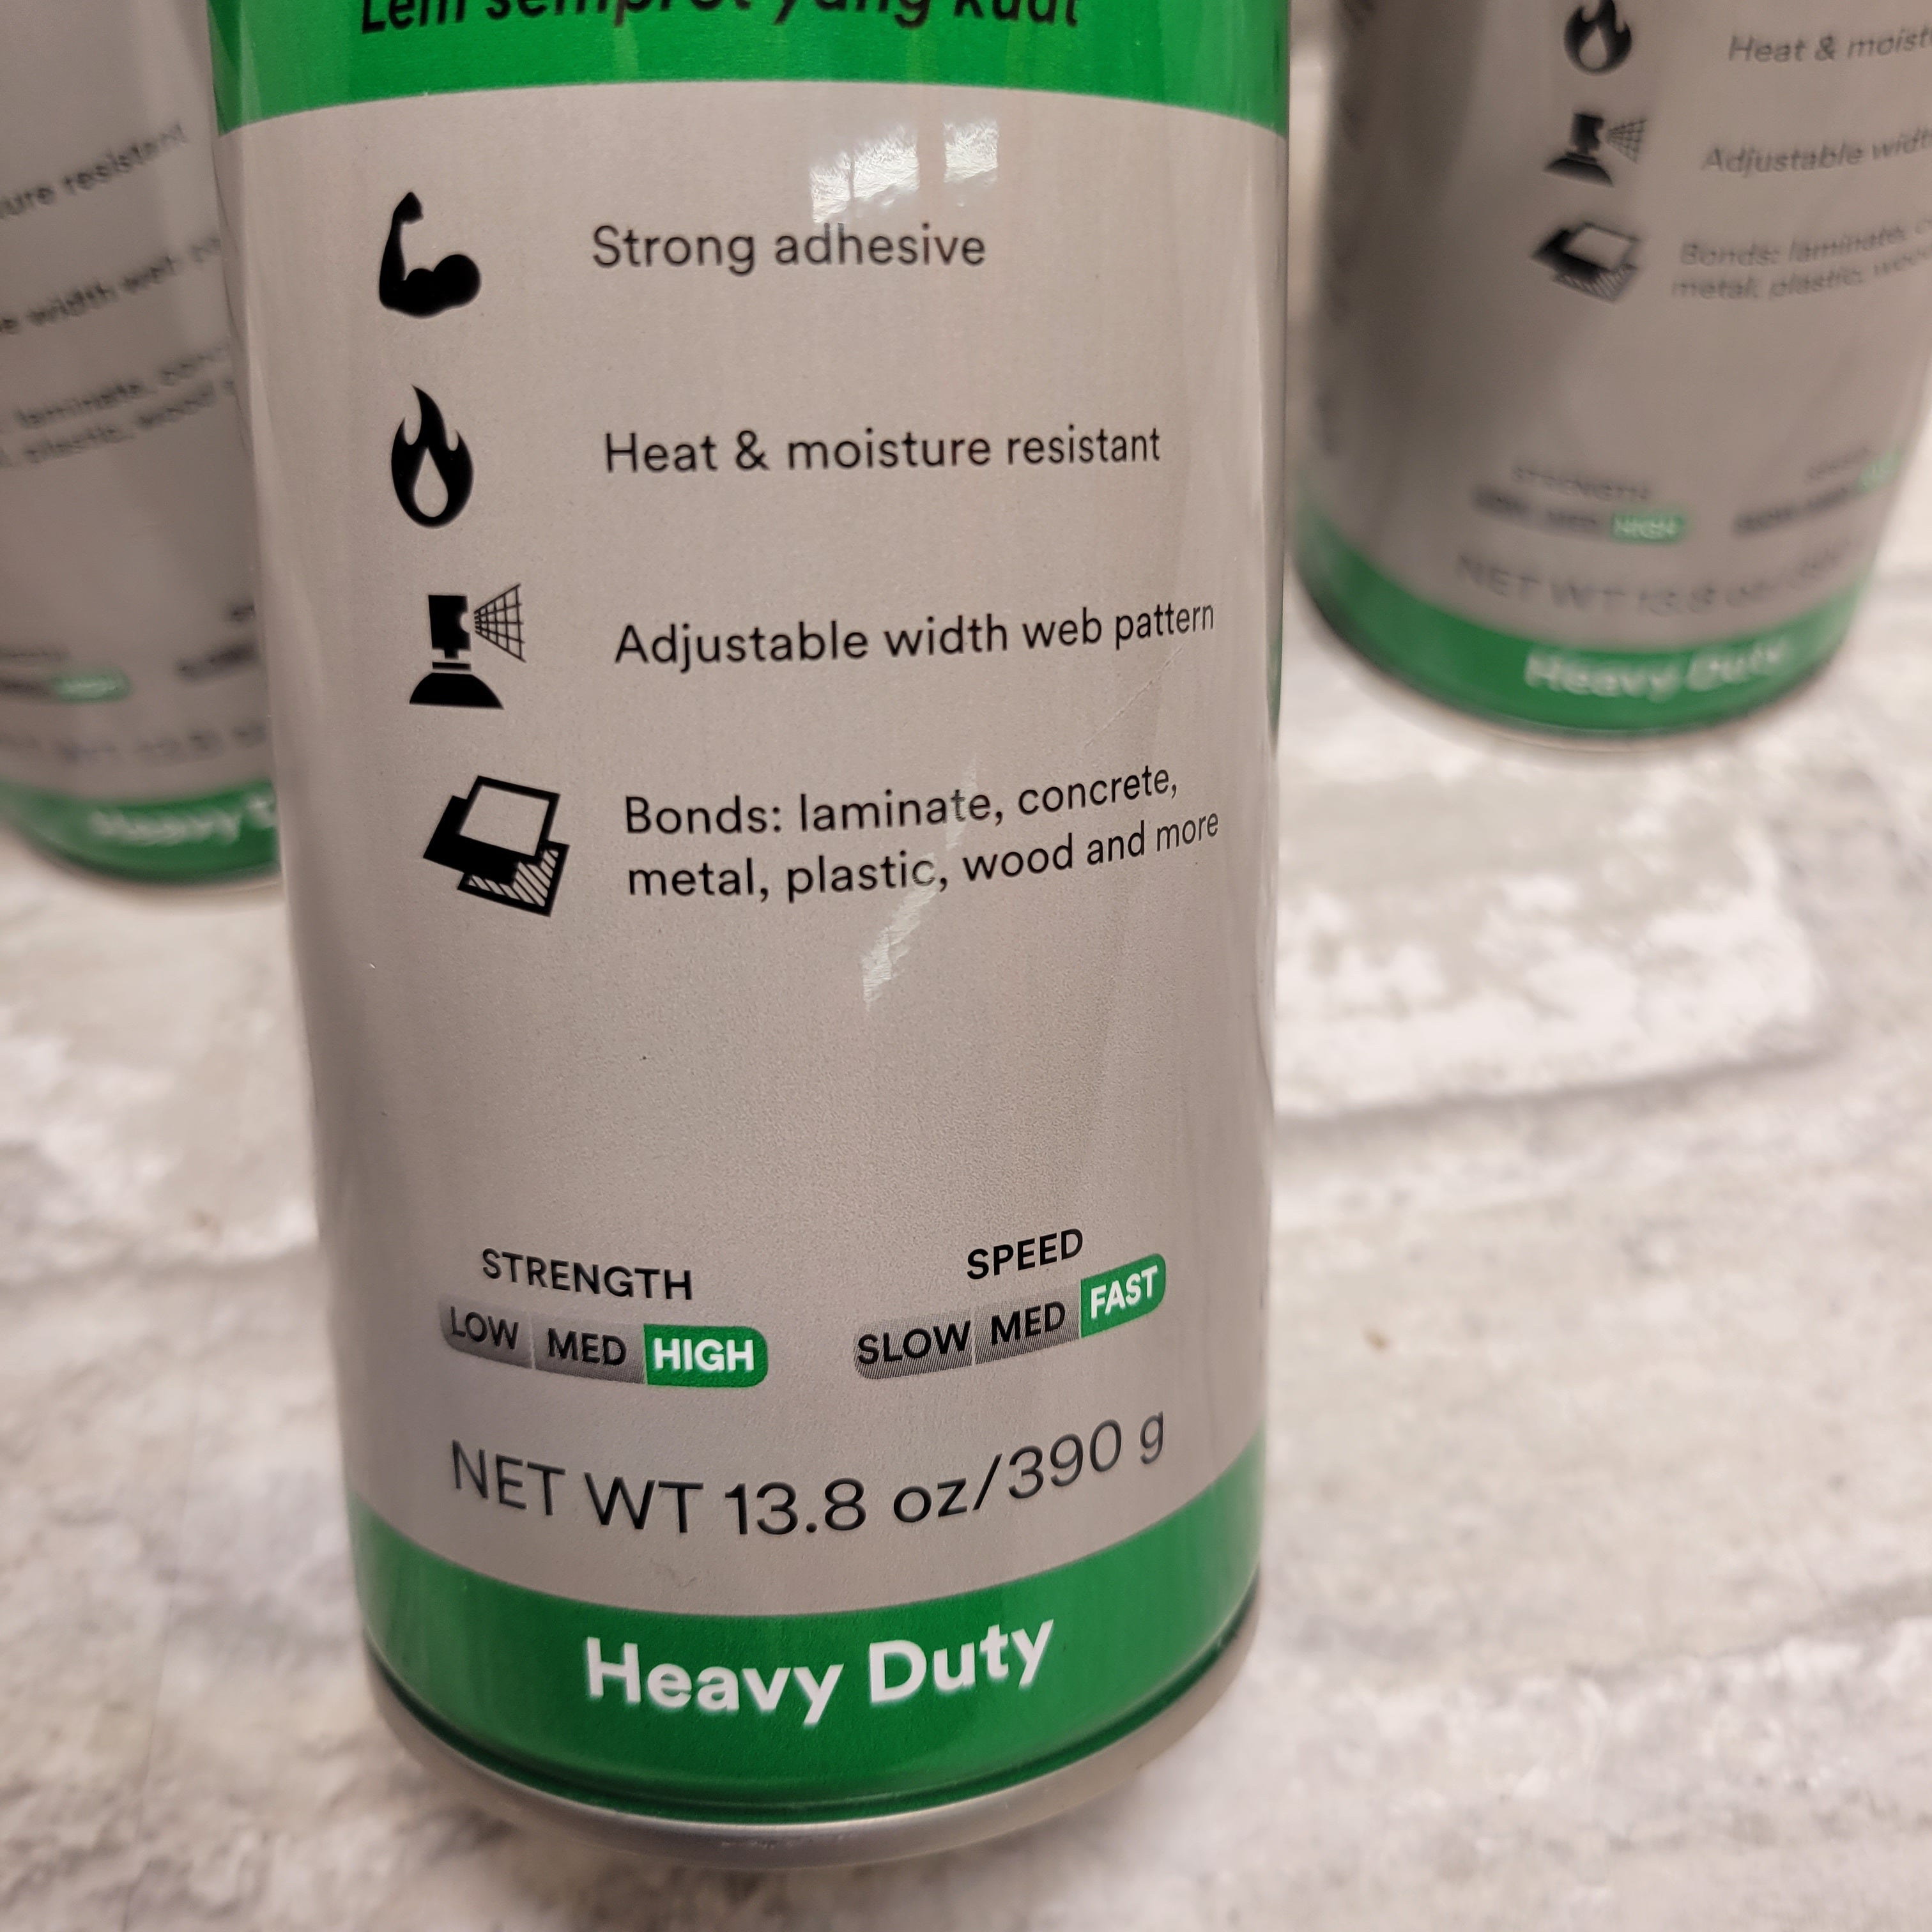 3M Heavy Duty 20 Spray Adhesive Clear, Net Weight 13.75 oz, 3 Pk (8150489694446)